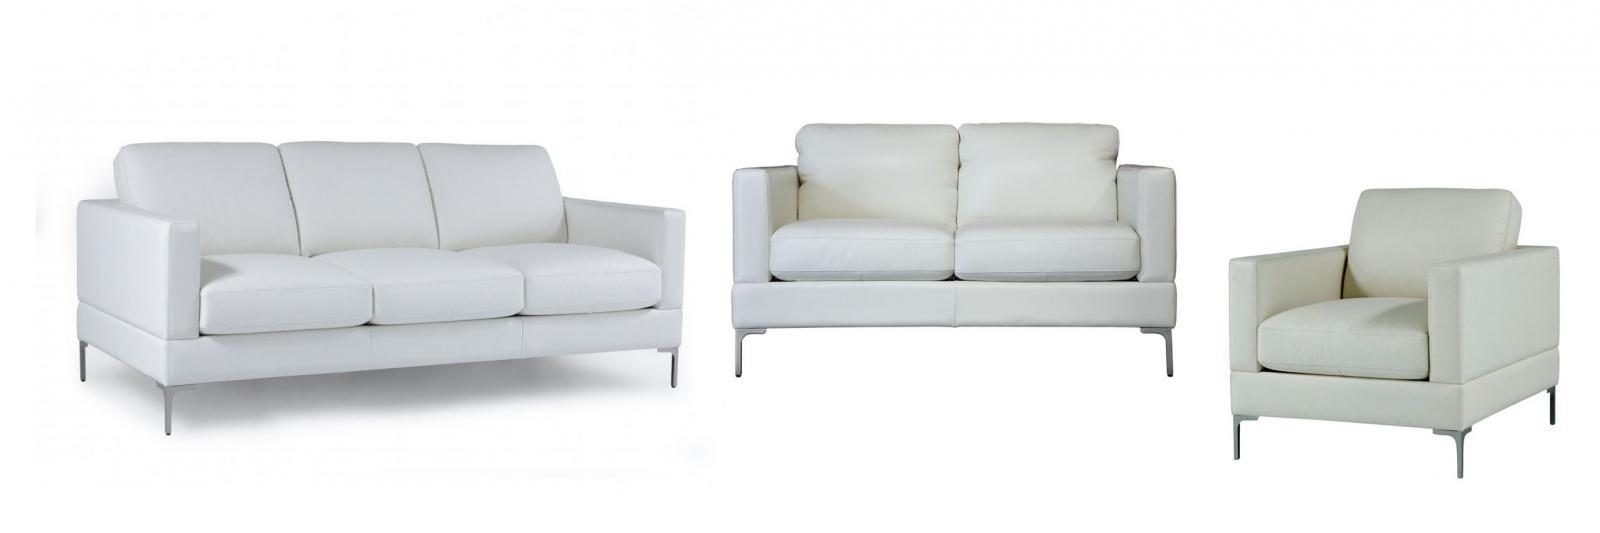 

                    
Moroni Tobia 351 Arm Chairs White Top grain leather Purchase 
